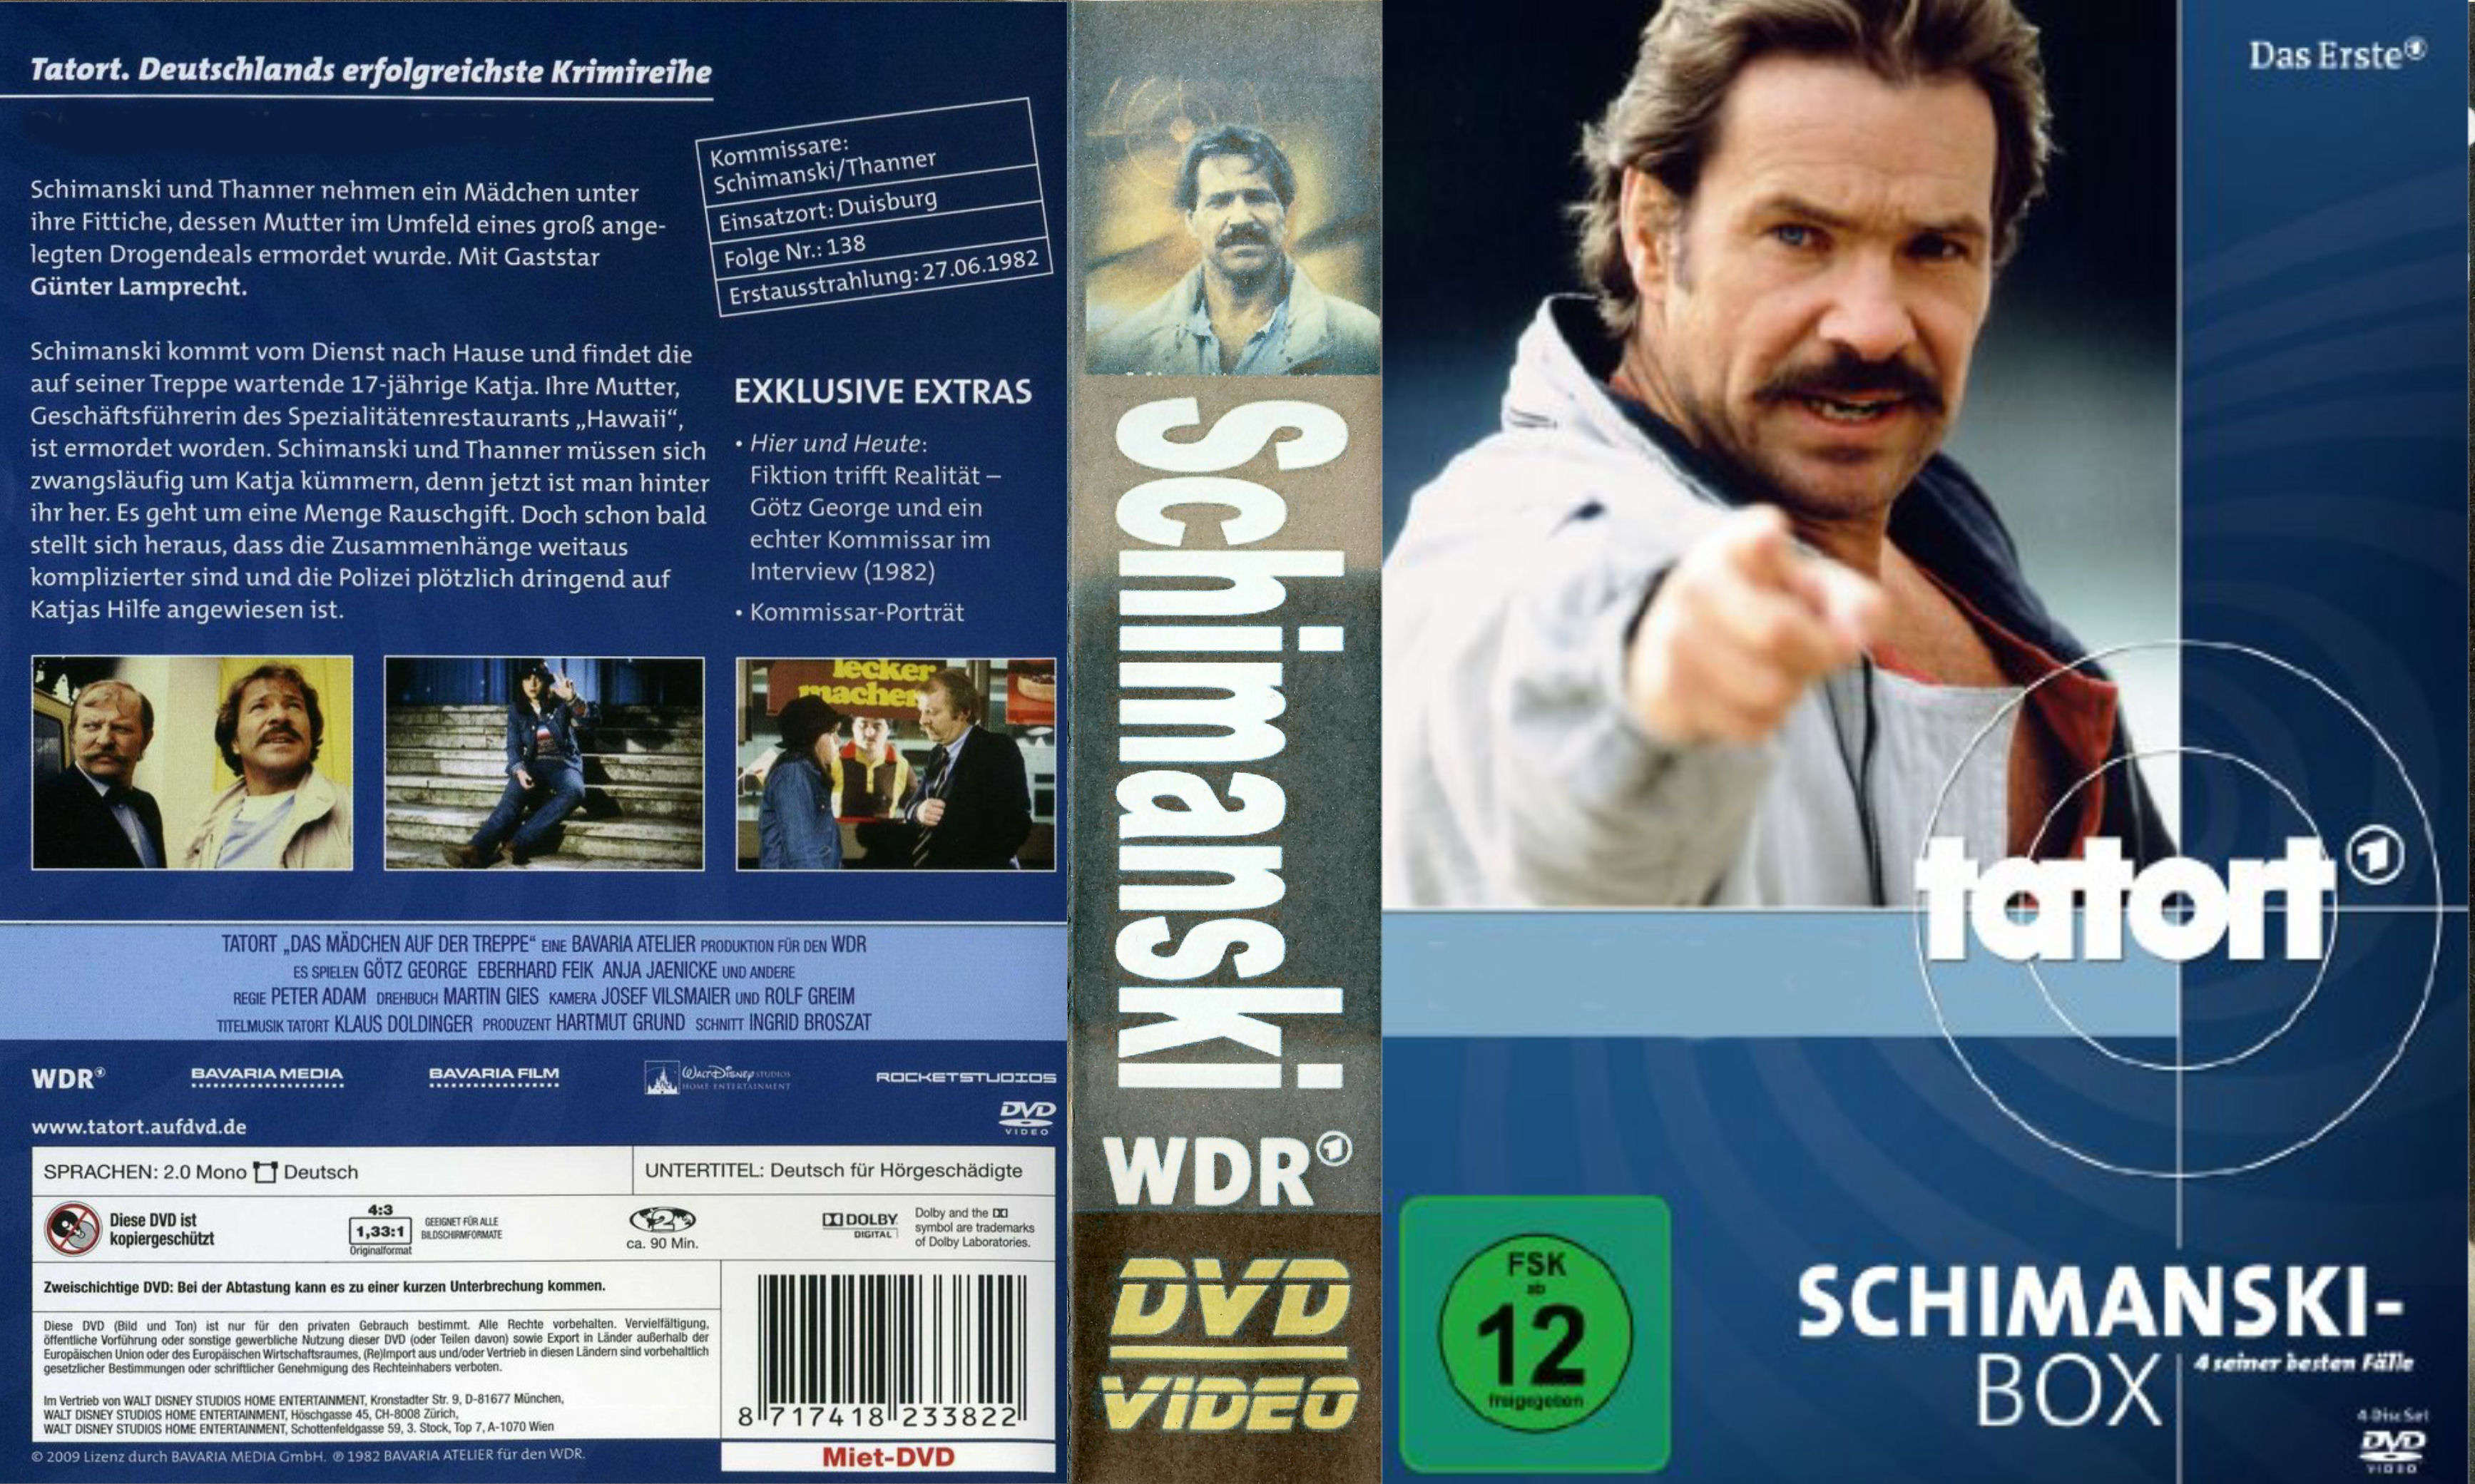 Schimanski Collectie Tatort No Subs - DvD 15